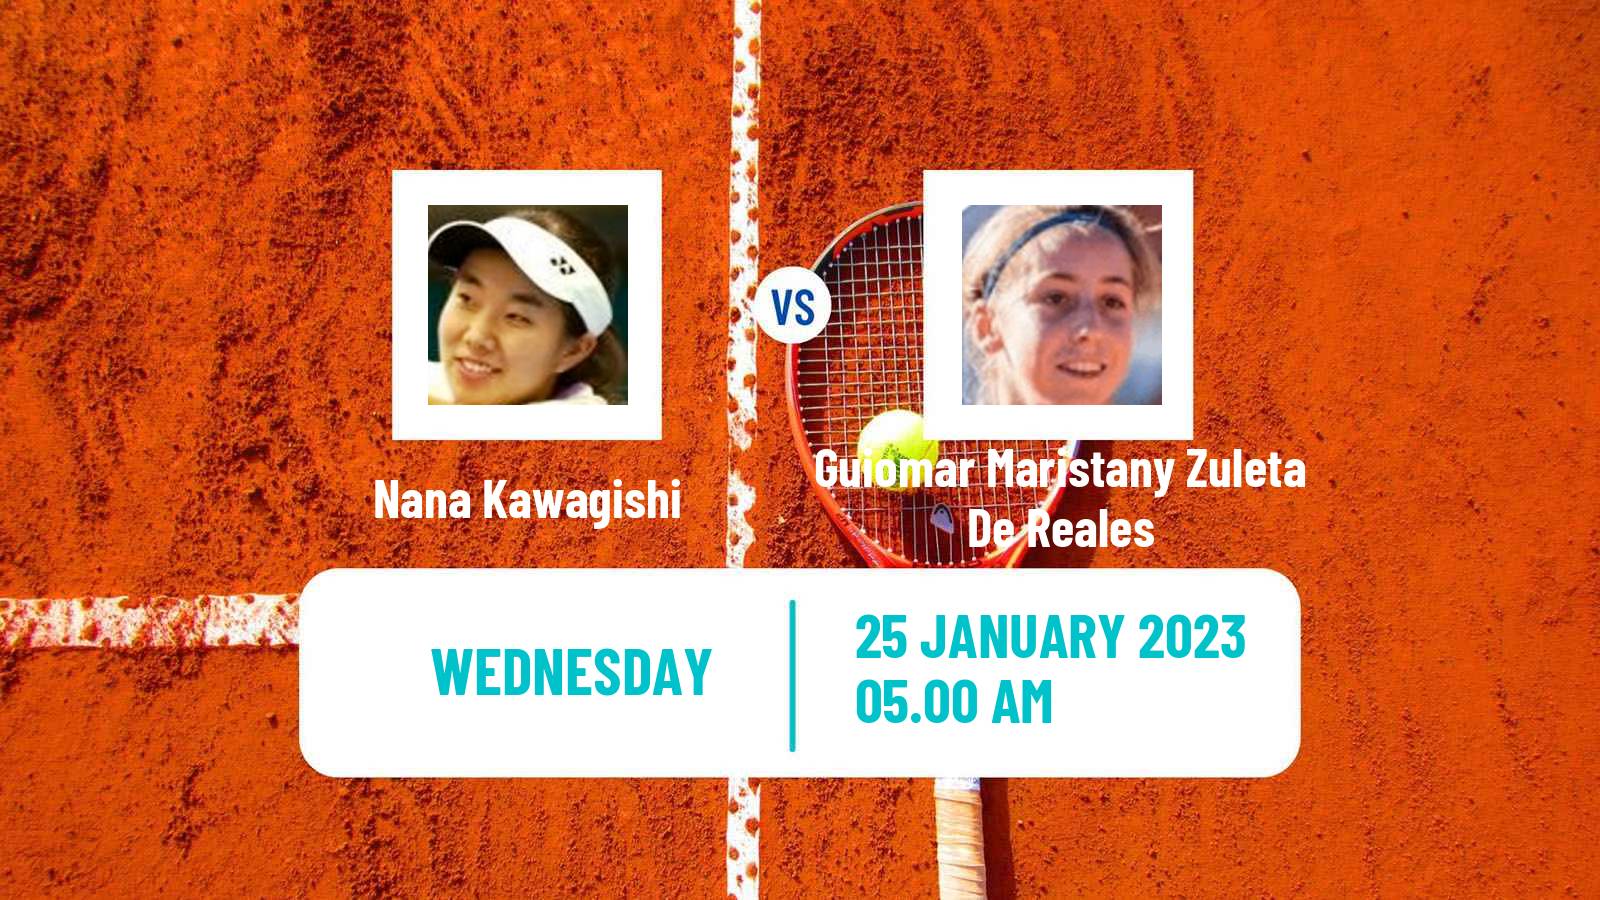 Tennis ITF Tournaments Nana Kawagishi - Guiomar Maristany Zuleta De Reales